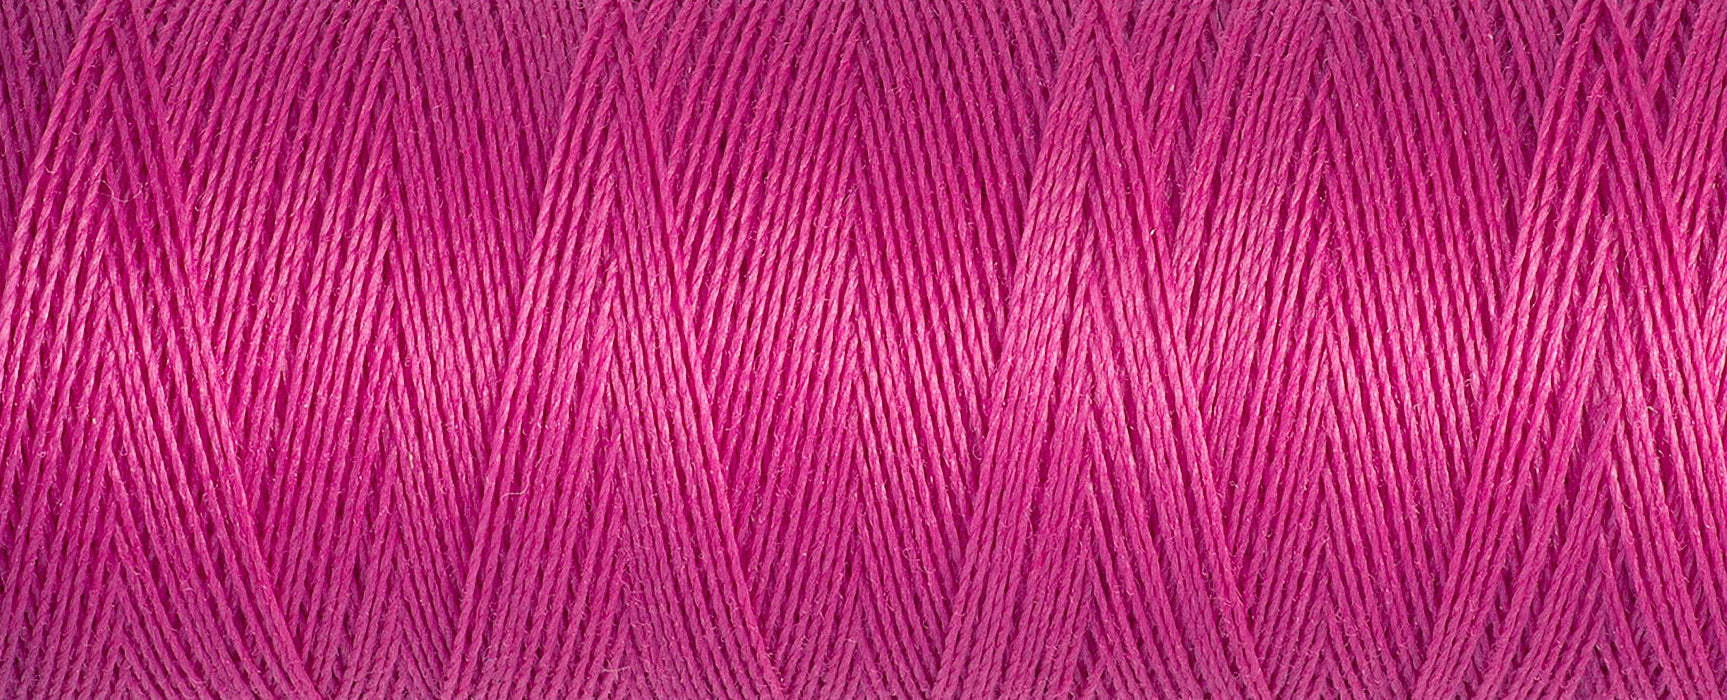 733 Hot Pink - Gütermann Sew All rPET Thread 100m